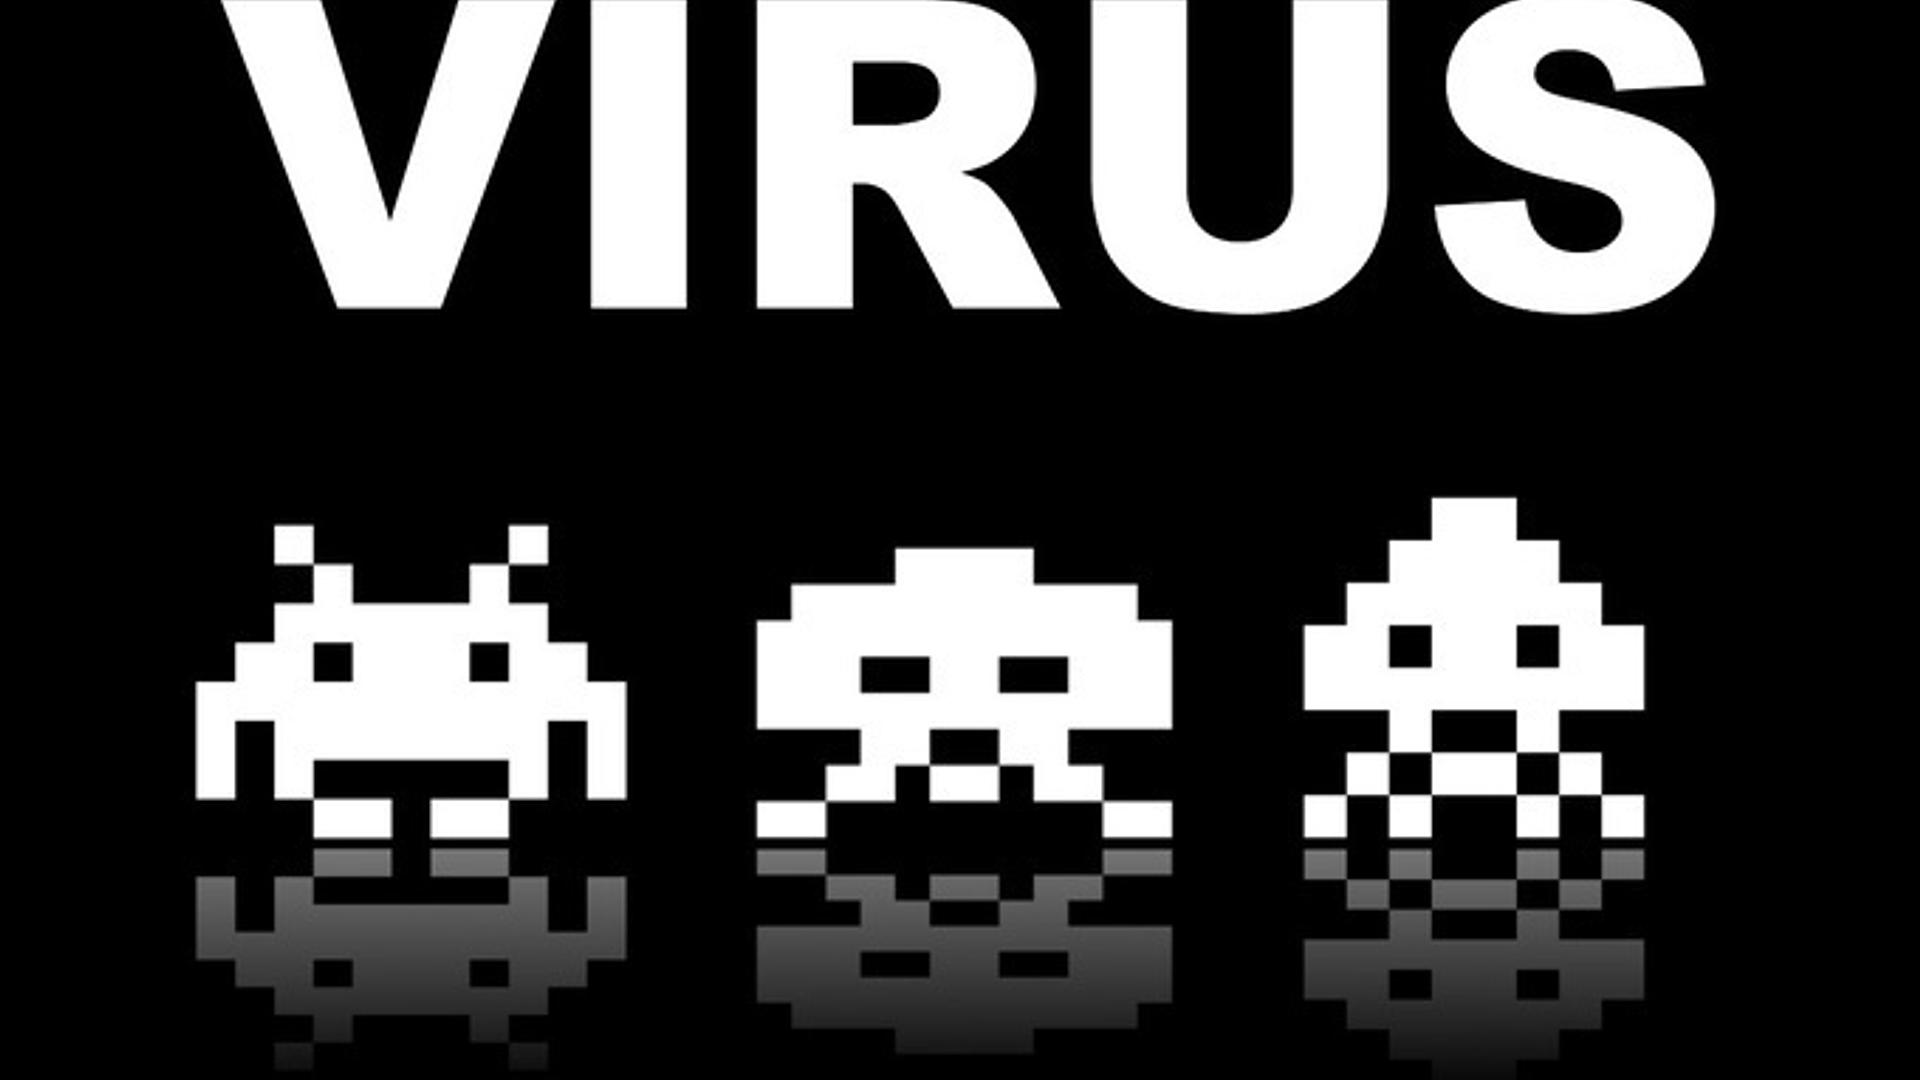 Project Virus